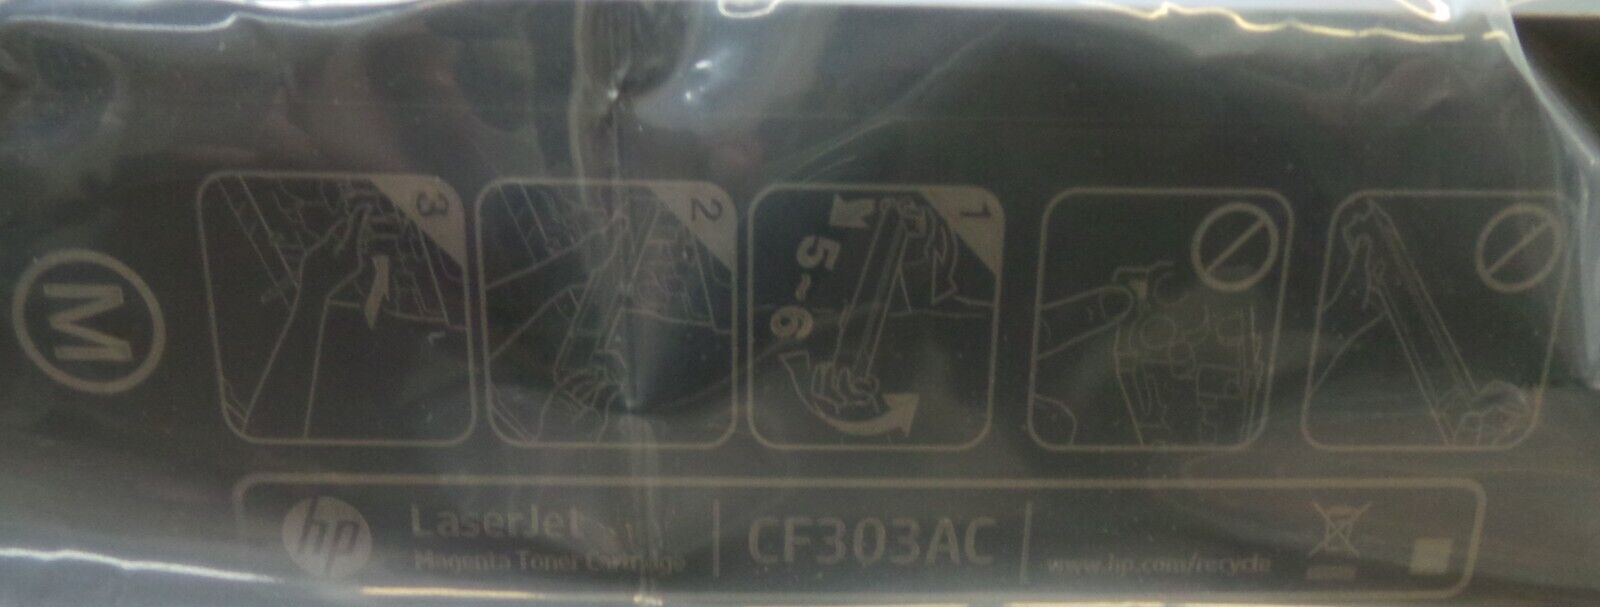 HP CF303AC  827A Magenta Toner Cartridge M880z, New Sealed Beg